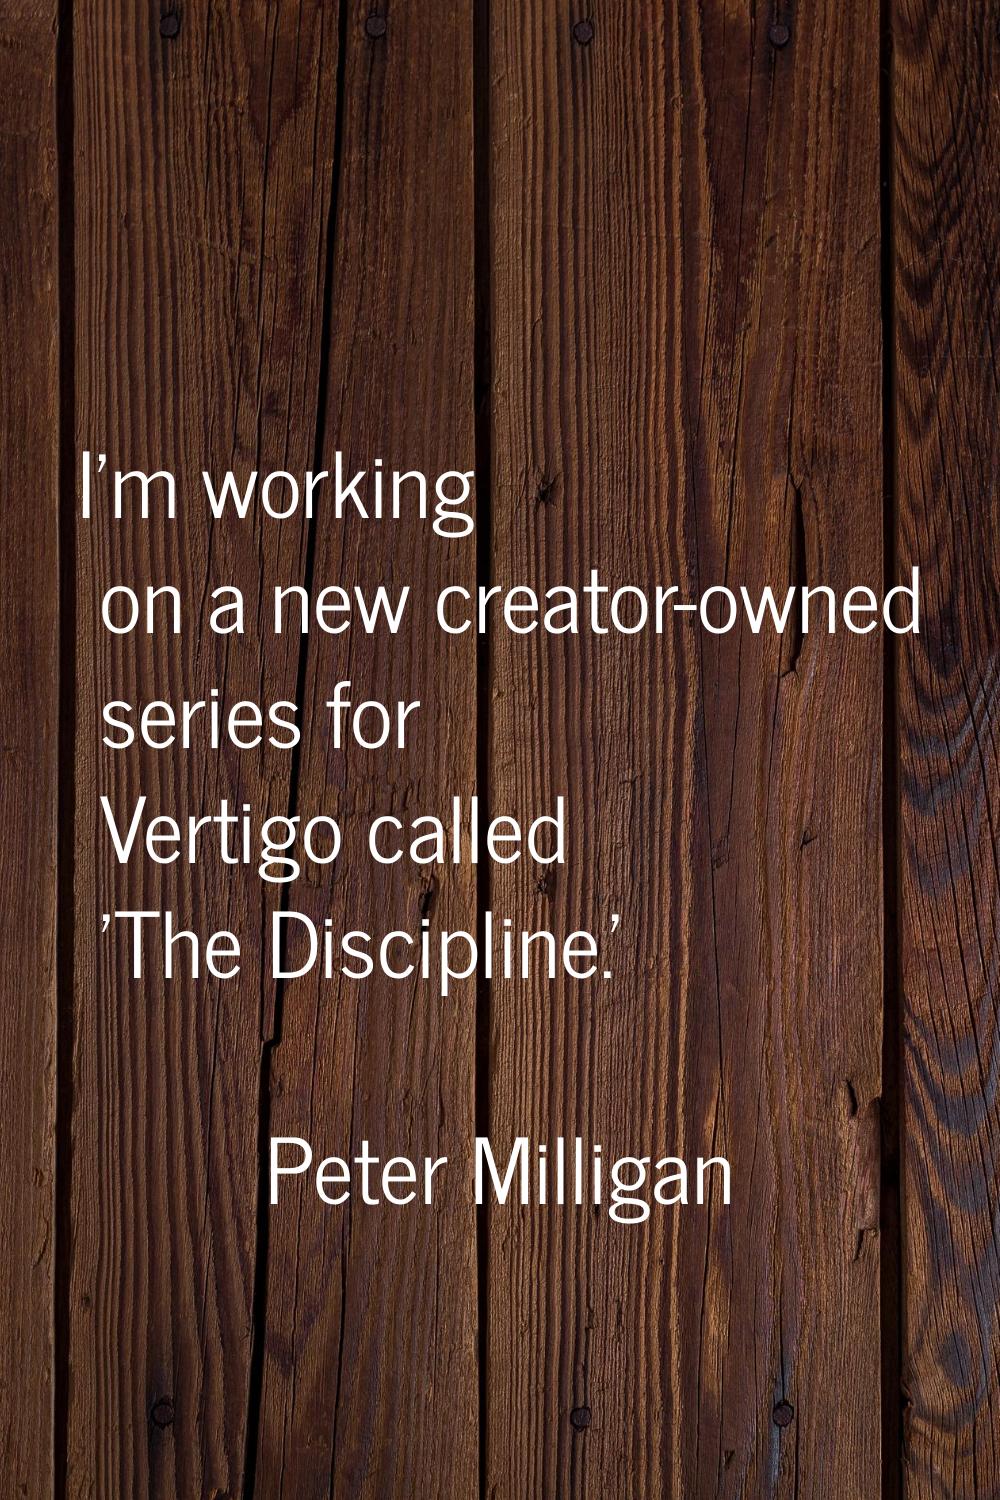 I'm working on a new creator-owned series for Vertigo called 'The Discipline.'